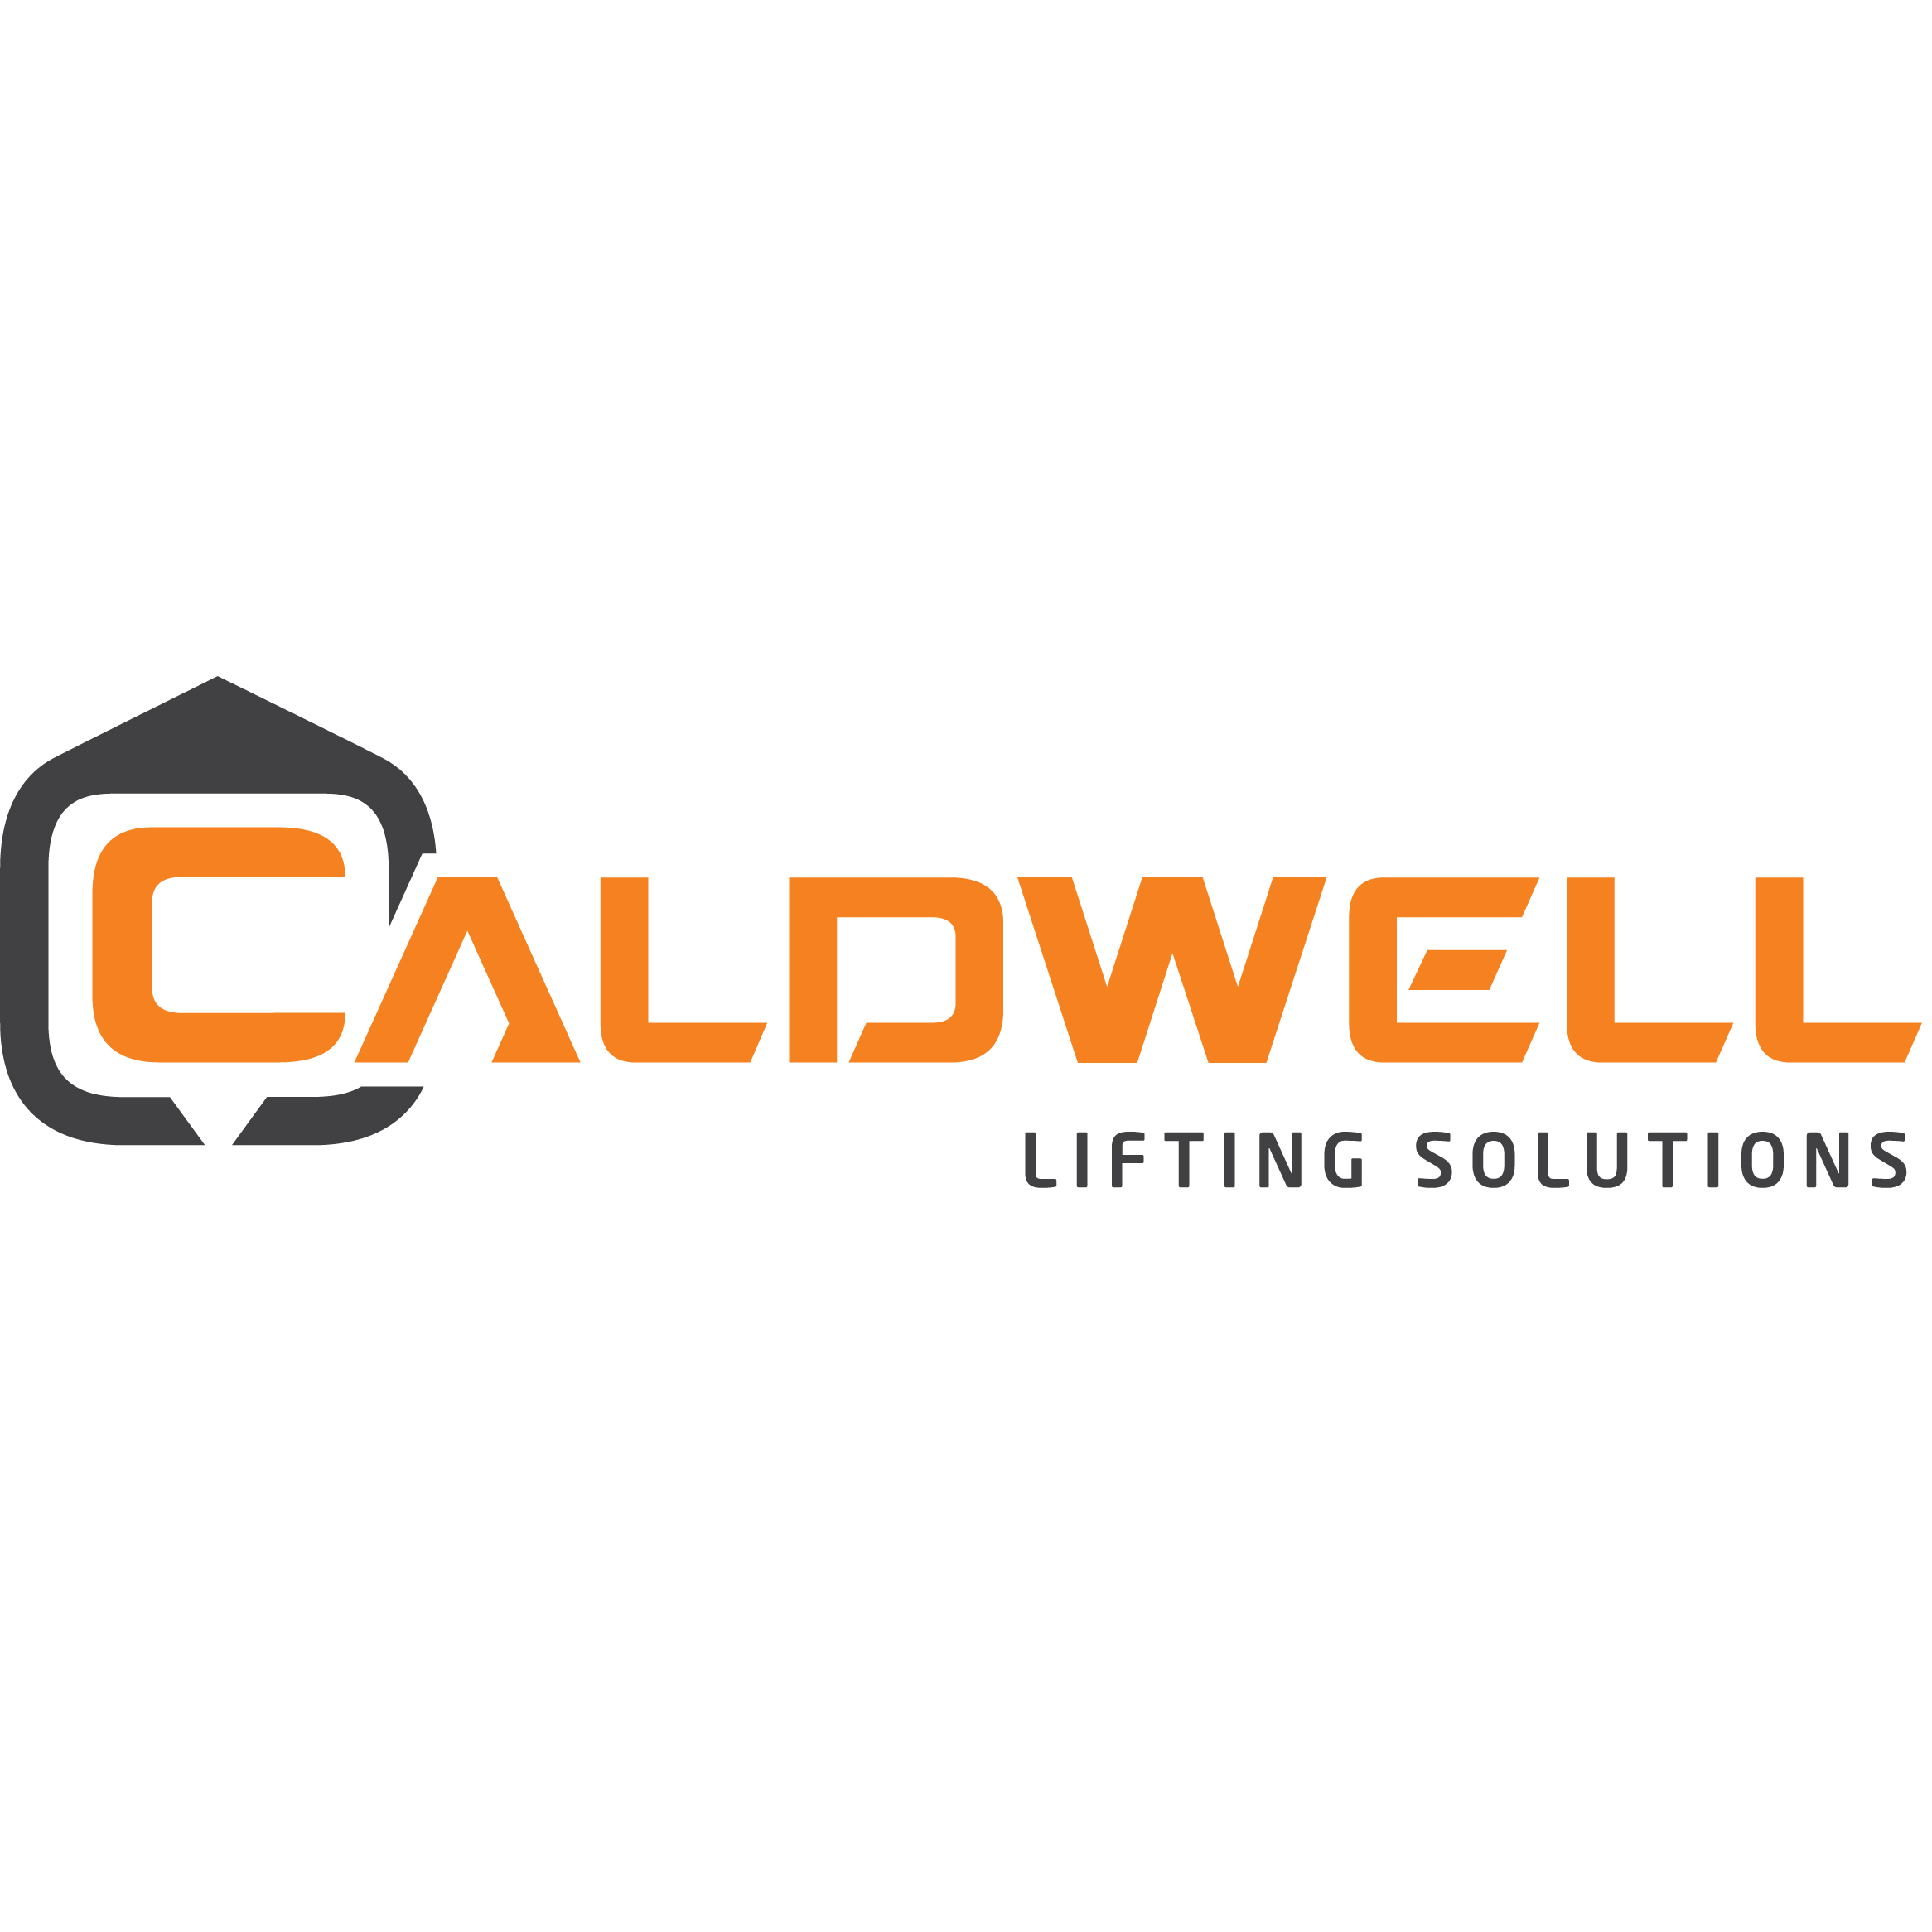 Caldwell Lifting Solutions